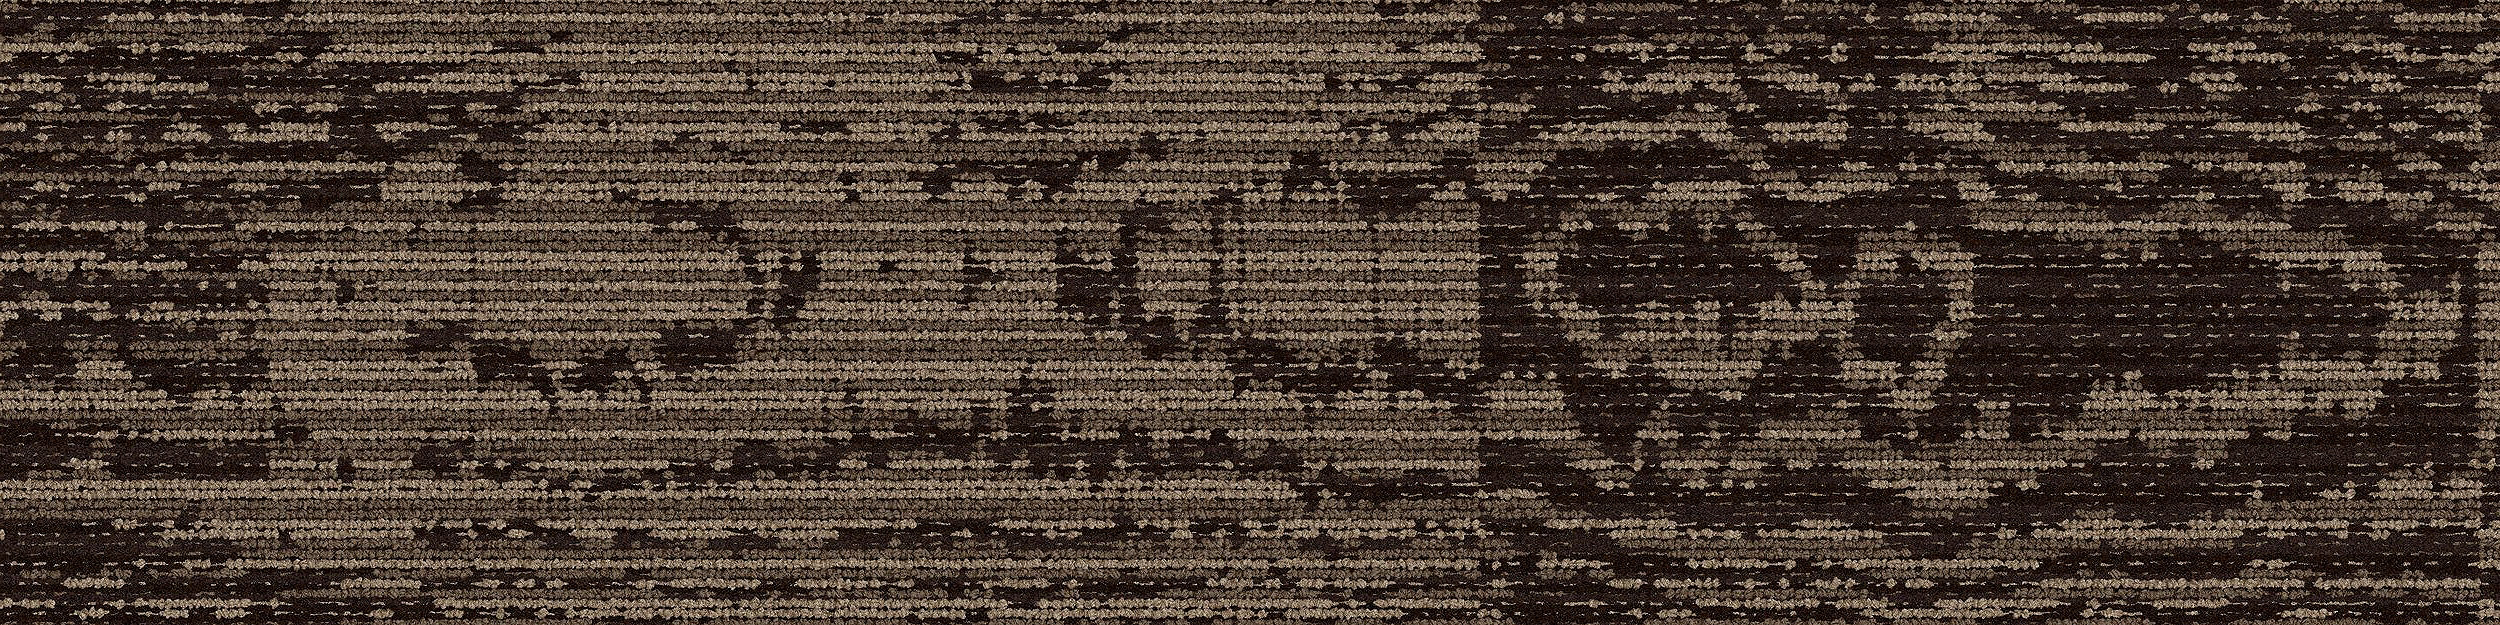 GN156 Carpet Tile In Mouse image number 4